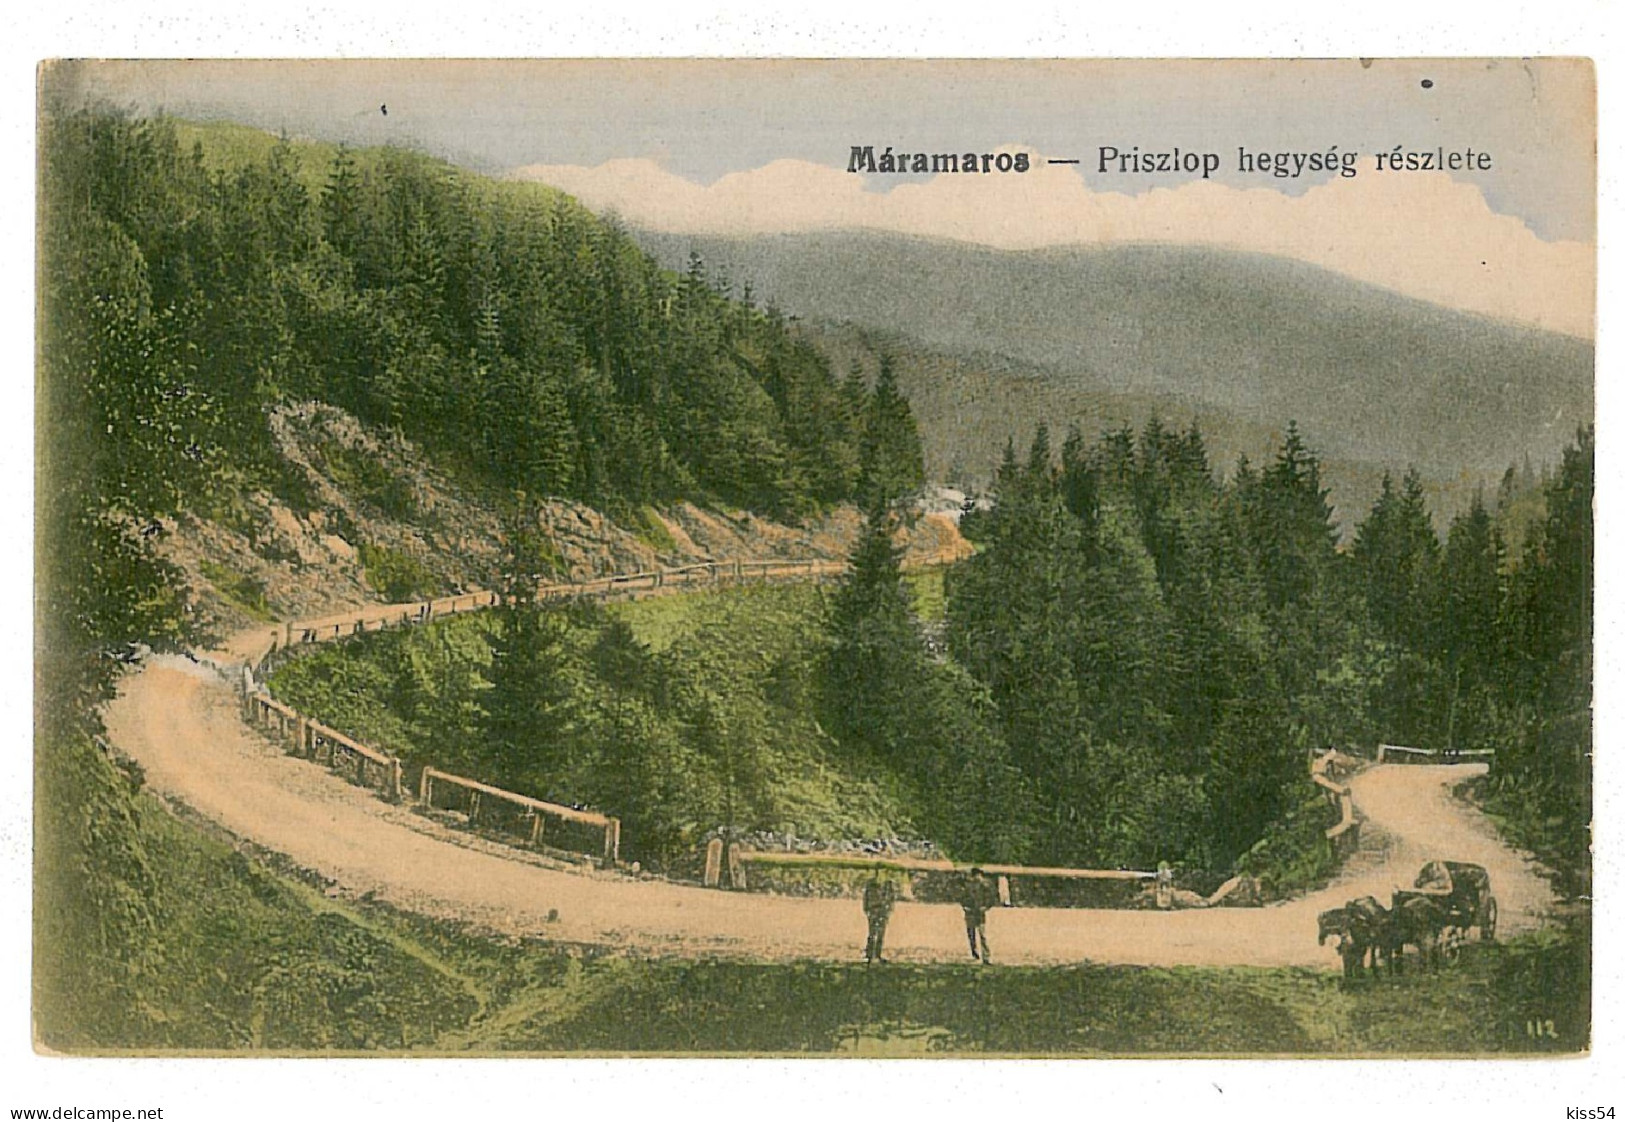 RO 999 - 3889 MARAMURES, Romania, Pasul Prislop, Cart - Old Postcard - Used - Romania